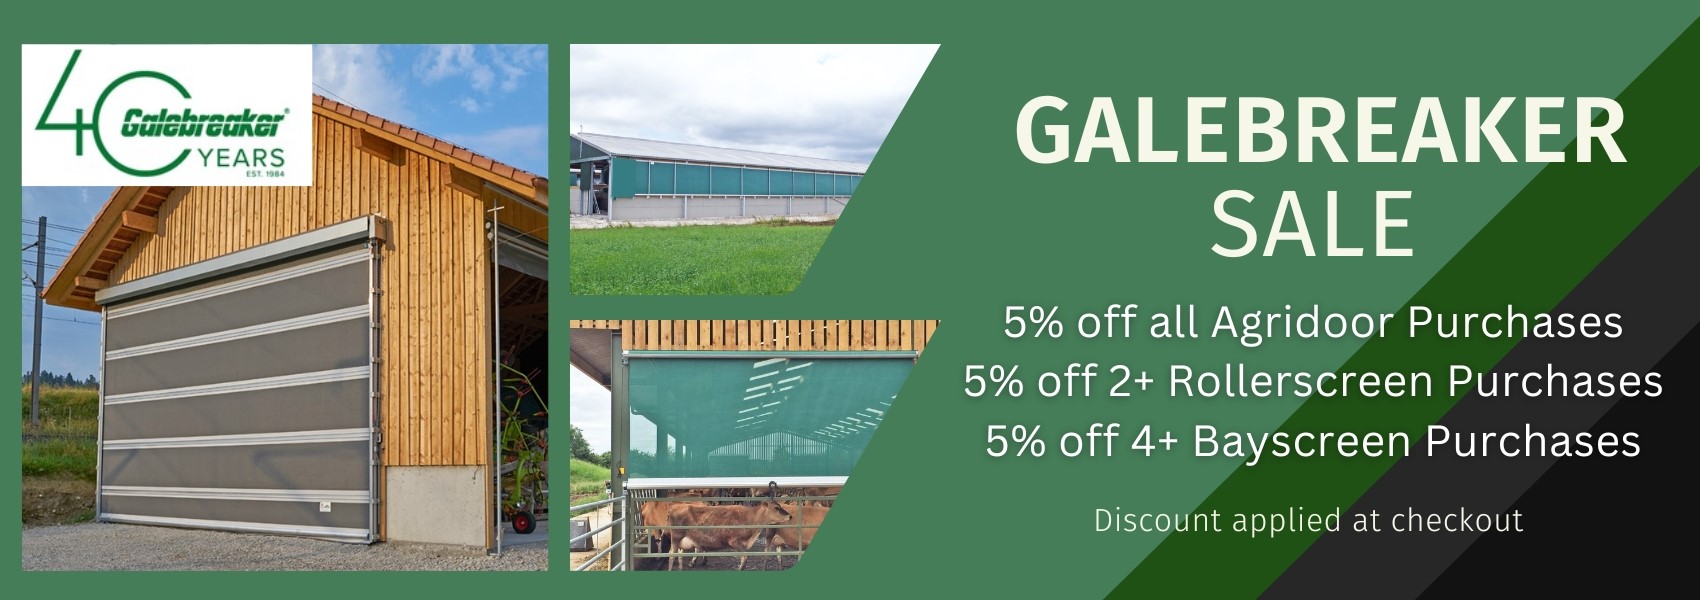 Galebreaker Sale, 5% off 4+ bayscreens, 5% off 2+ Rollerscreen, 5% off all Agridoors